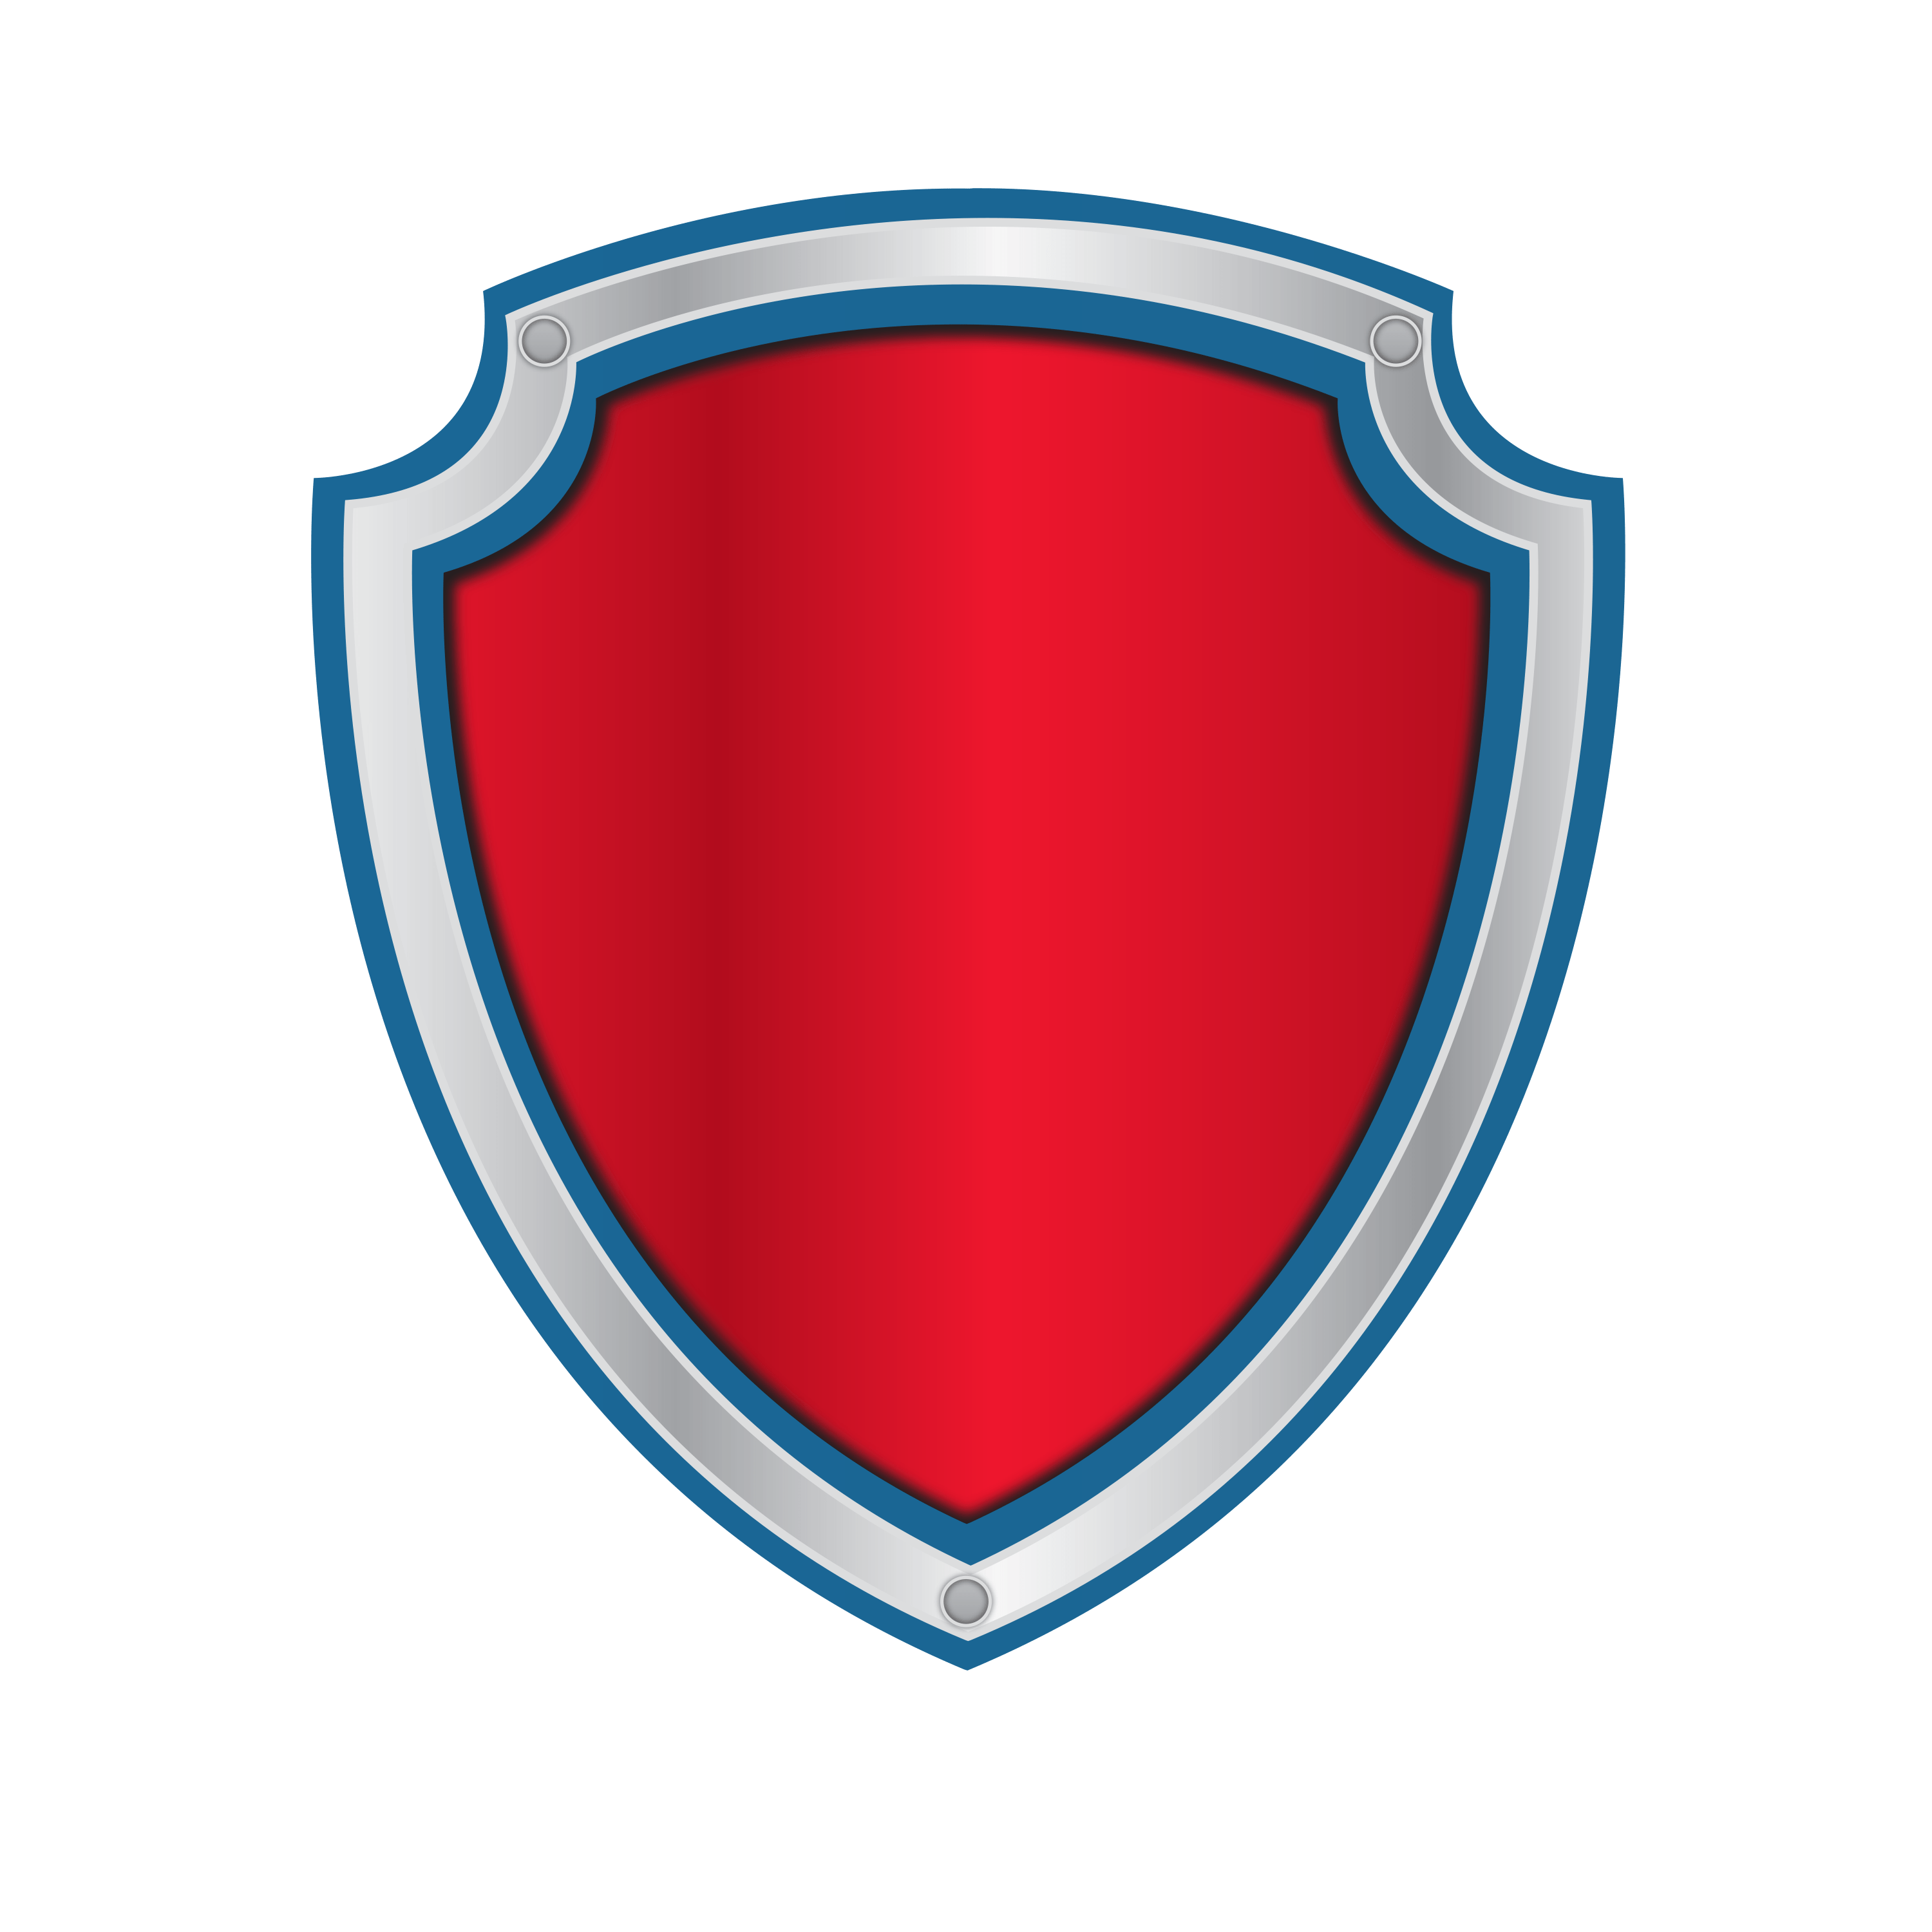 Paw patrol logo blank. Clipart shield circle